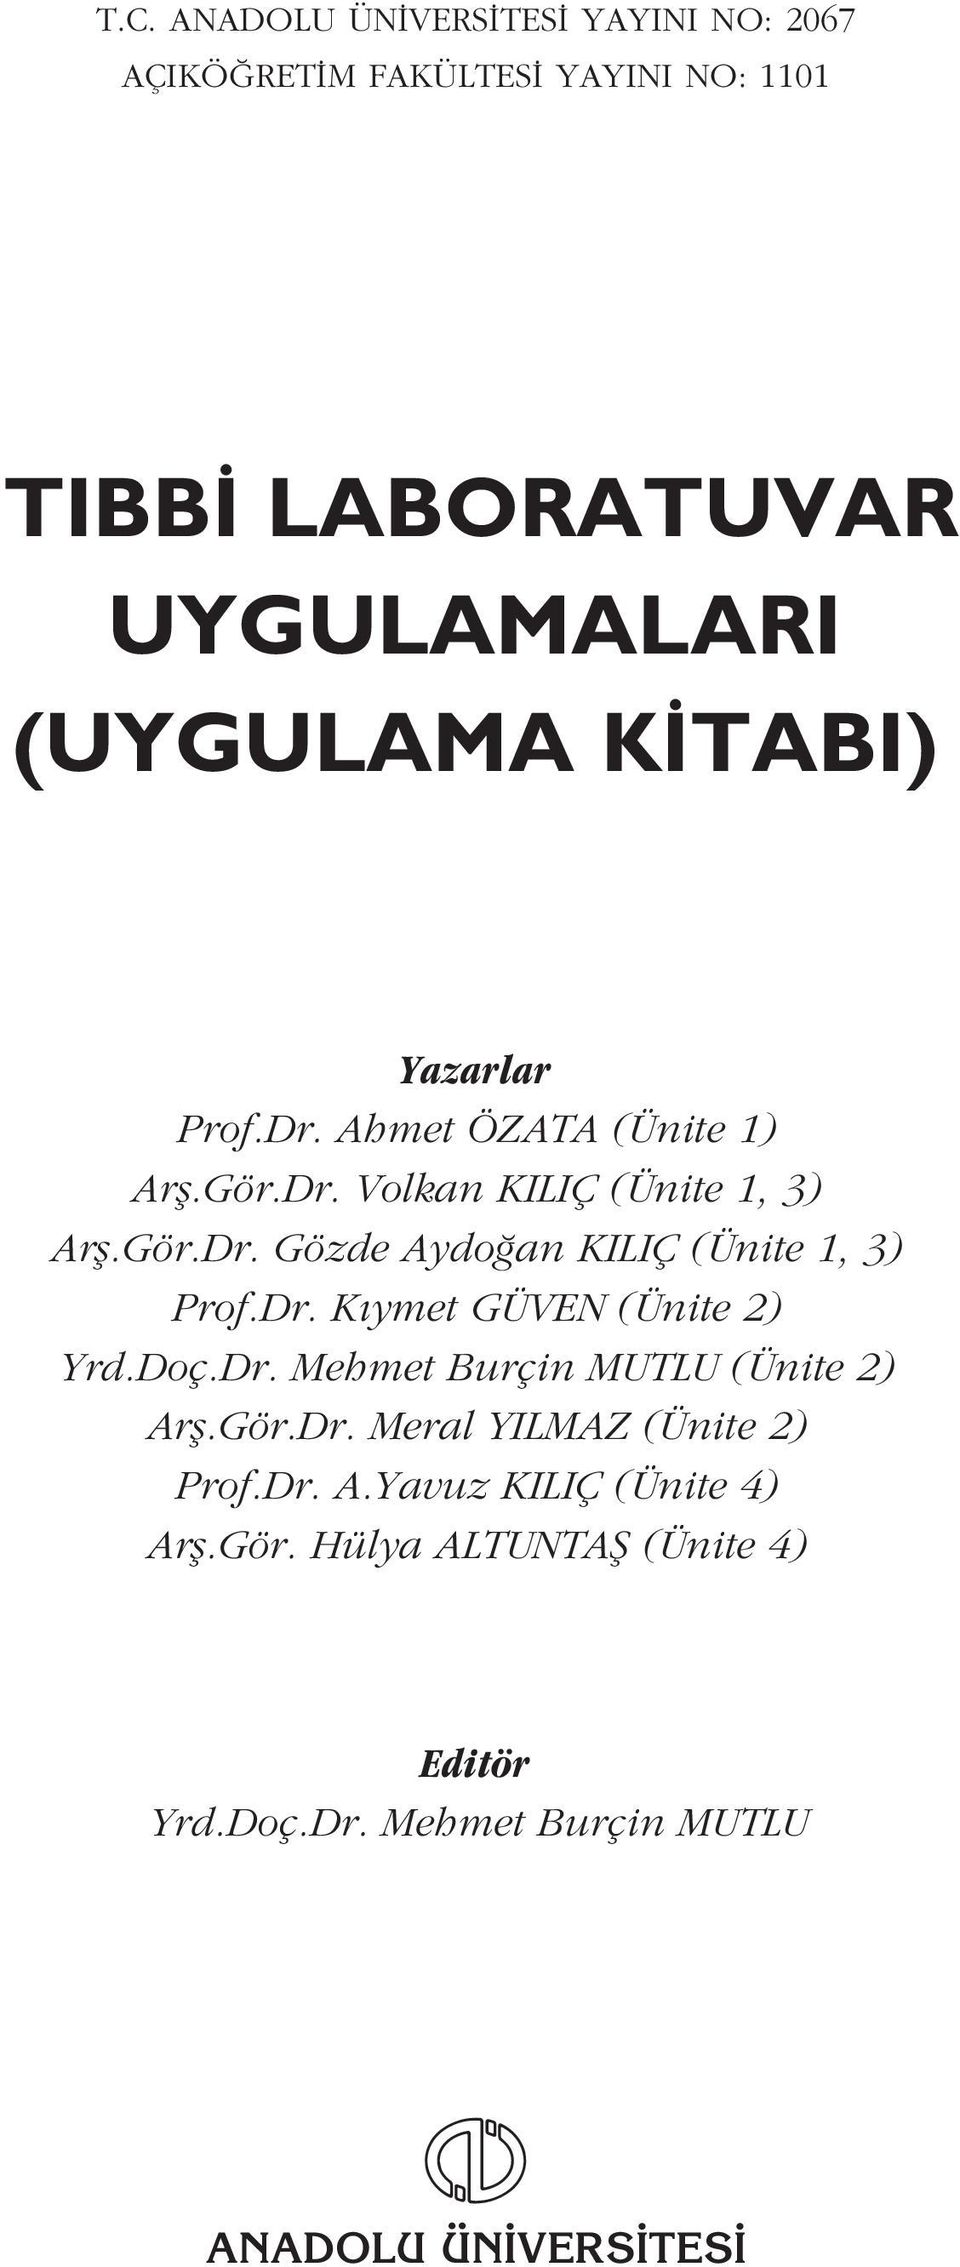 Dr. K ymet GÜVEN (Ünite 2) Yrd.Doç.Dr. Mehmet Burçin MUTLU (Ünite 2) Arfl.Gör.Dr. Meral YILMAZ (Ünite 2) Prof.Dr. A.Yavuz KILIÇ (Ünite 4) Arfl.